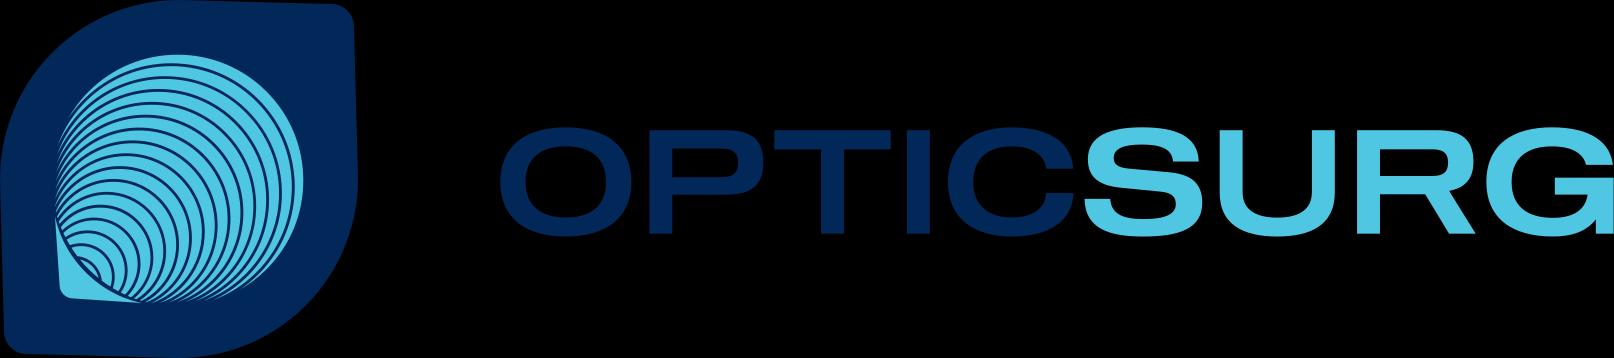 OpticSurg_logo